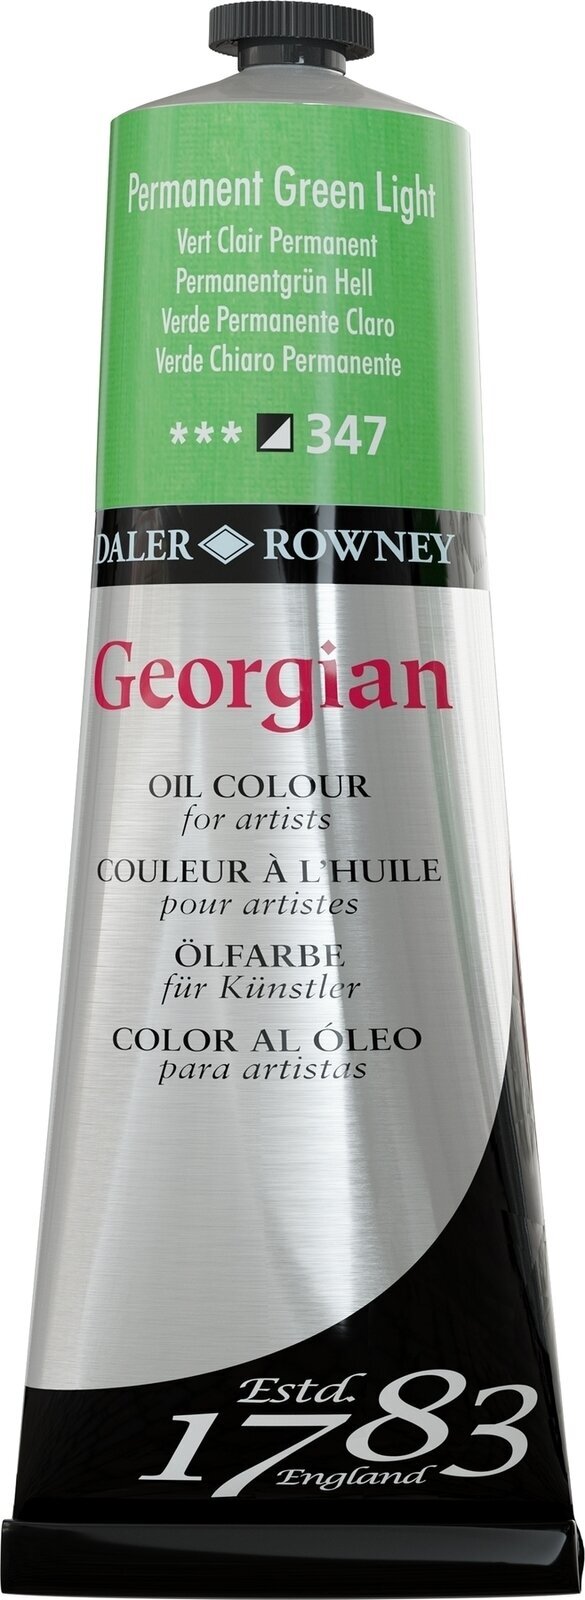 Oil colour Daler Rowney Georgian Oil Paint Permanent Green Light 225 ml 1 pc